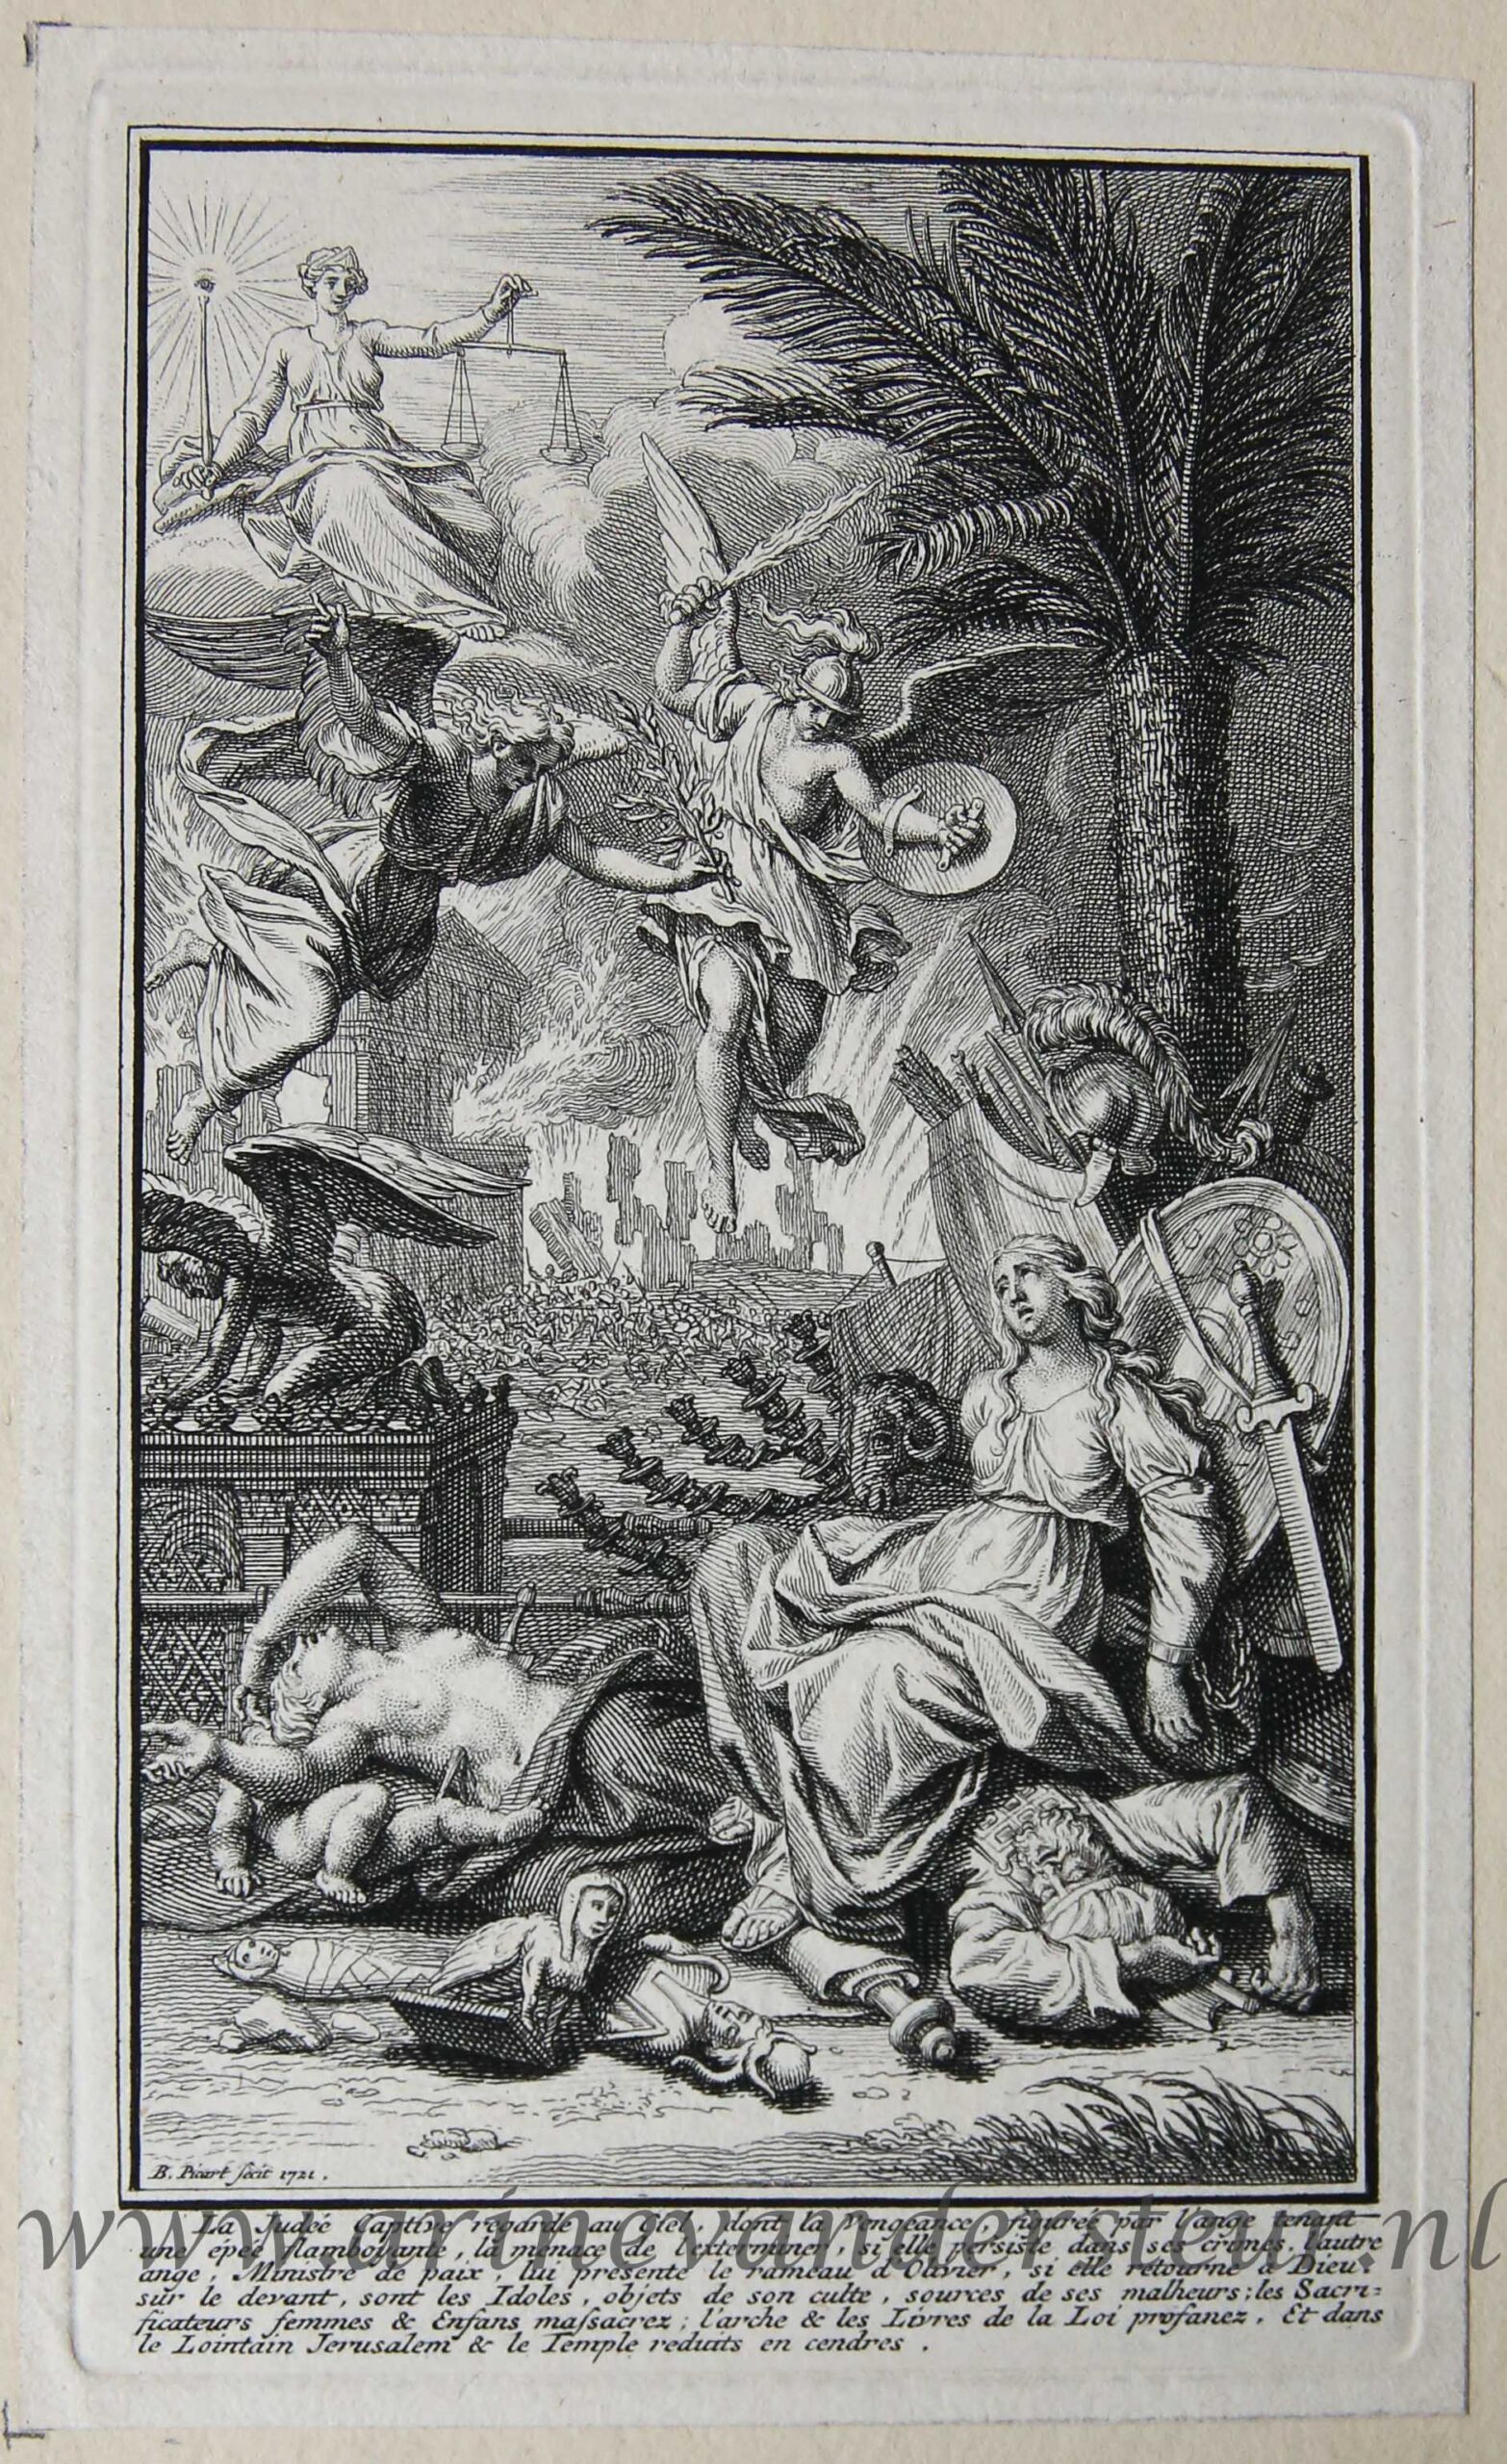 [Antique title page, 1722] Allegorical composition, published 1722, 1 p.